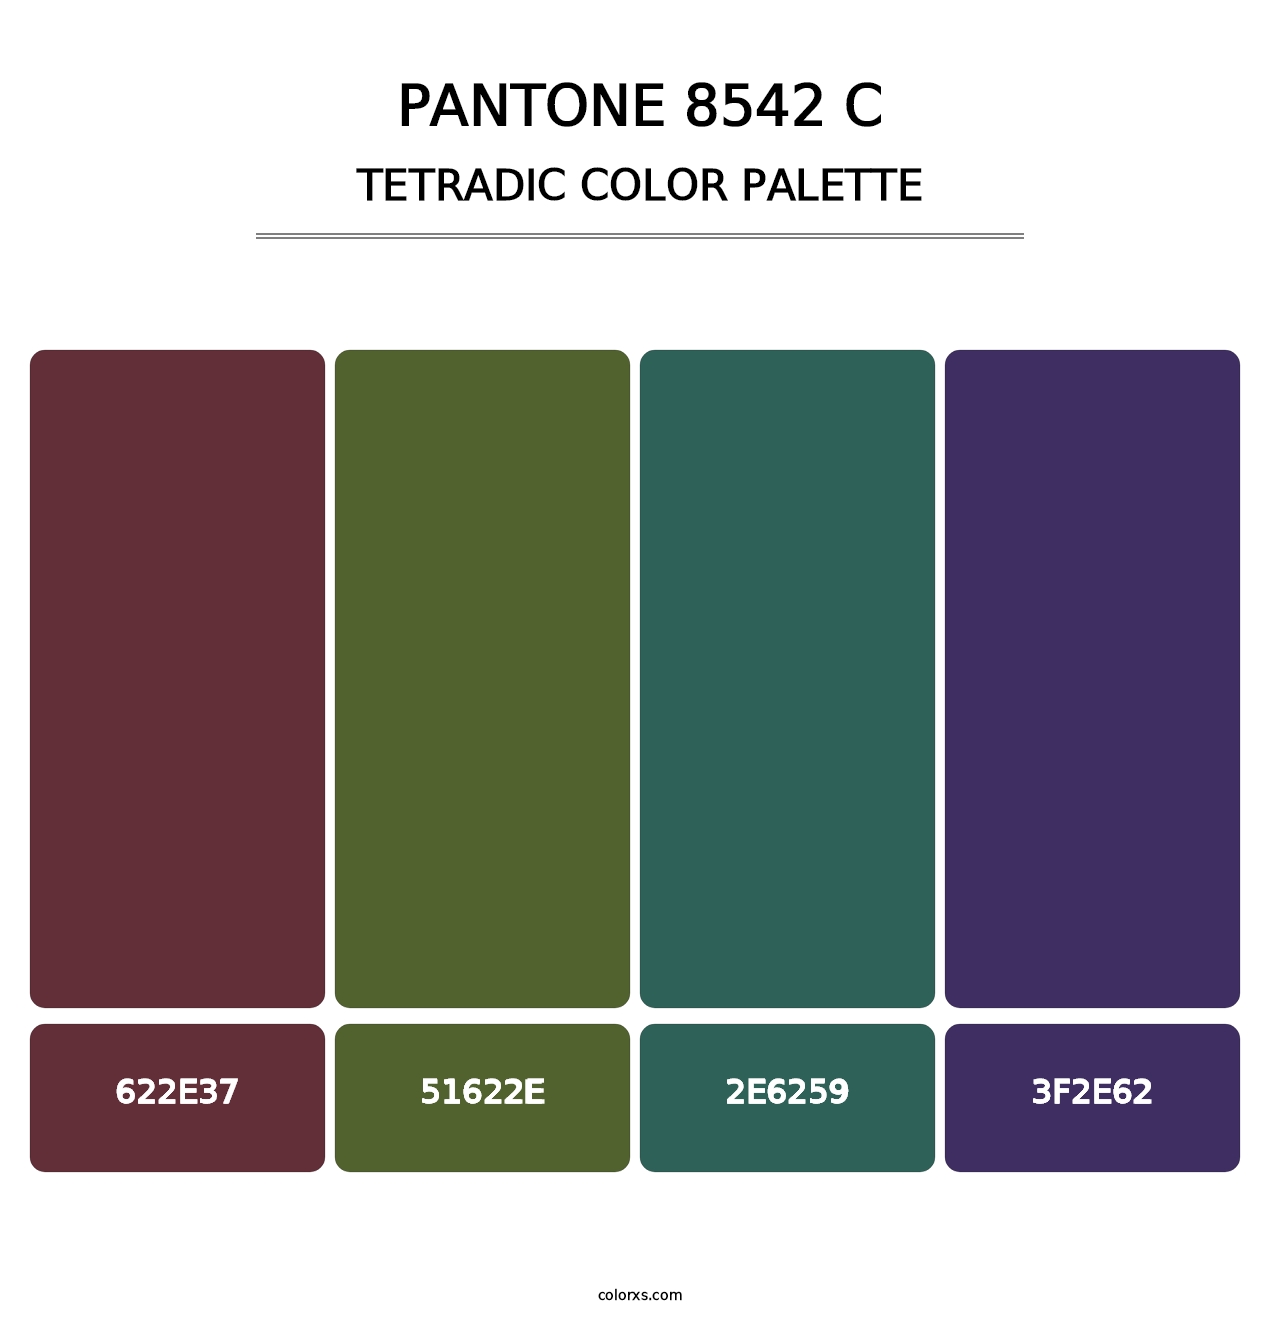 PANTONE 8542 C - Tetradic Color Palette